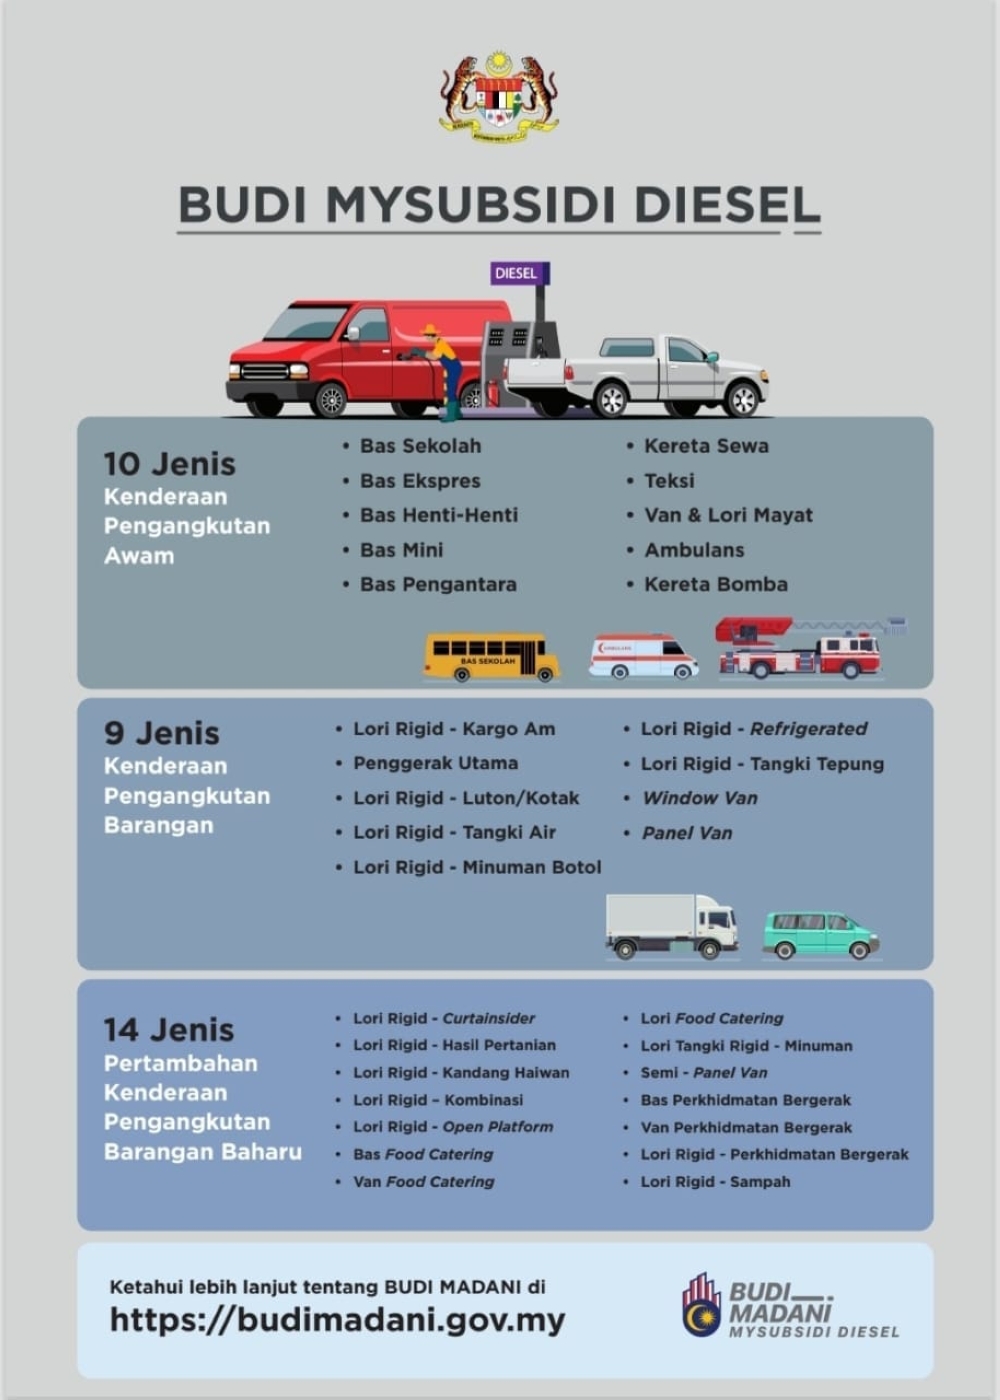 Diesel price Malaysia - Figure 3